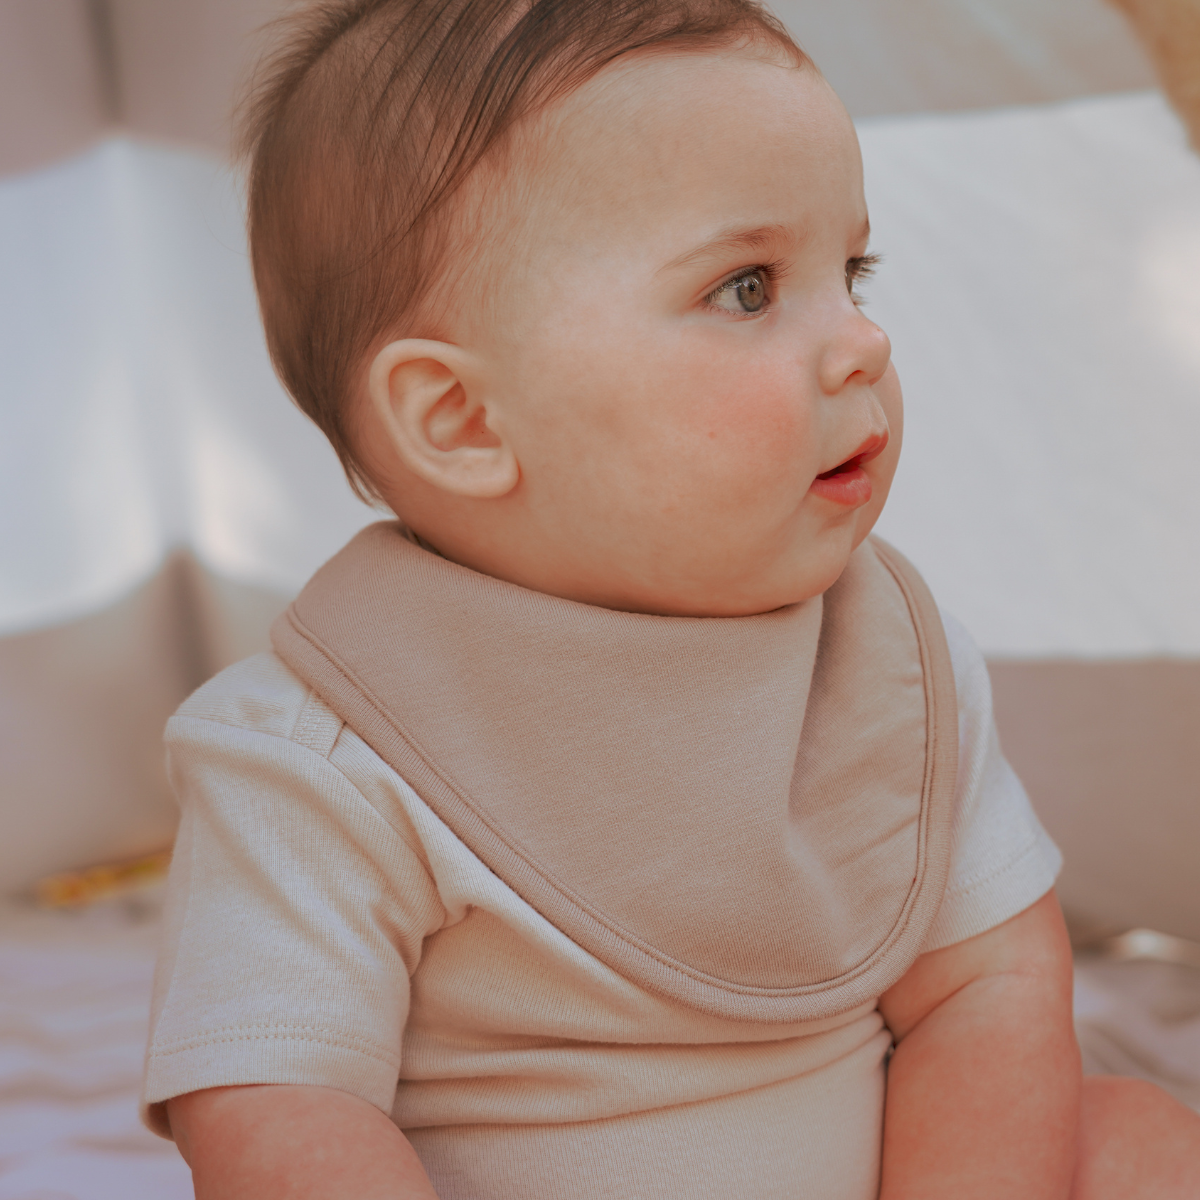 a baby wearing a cream coloured bib